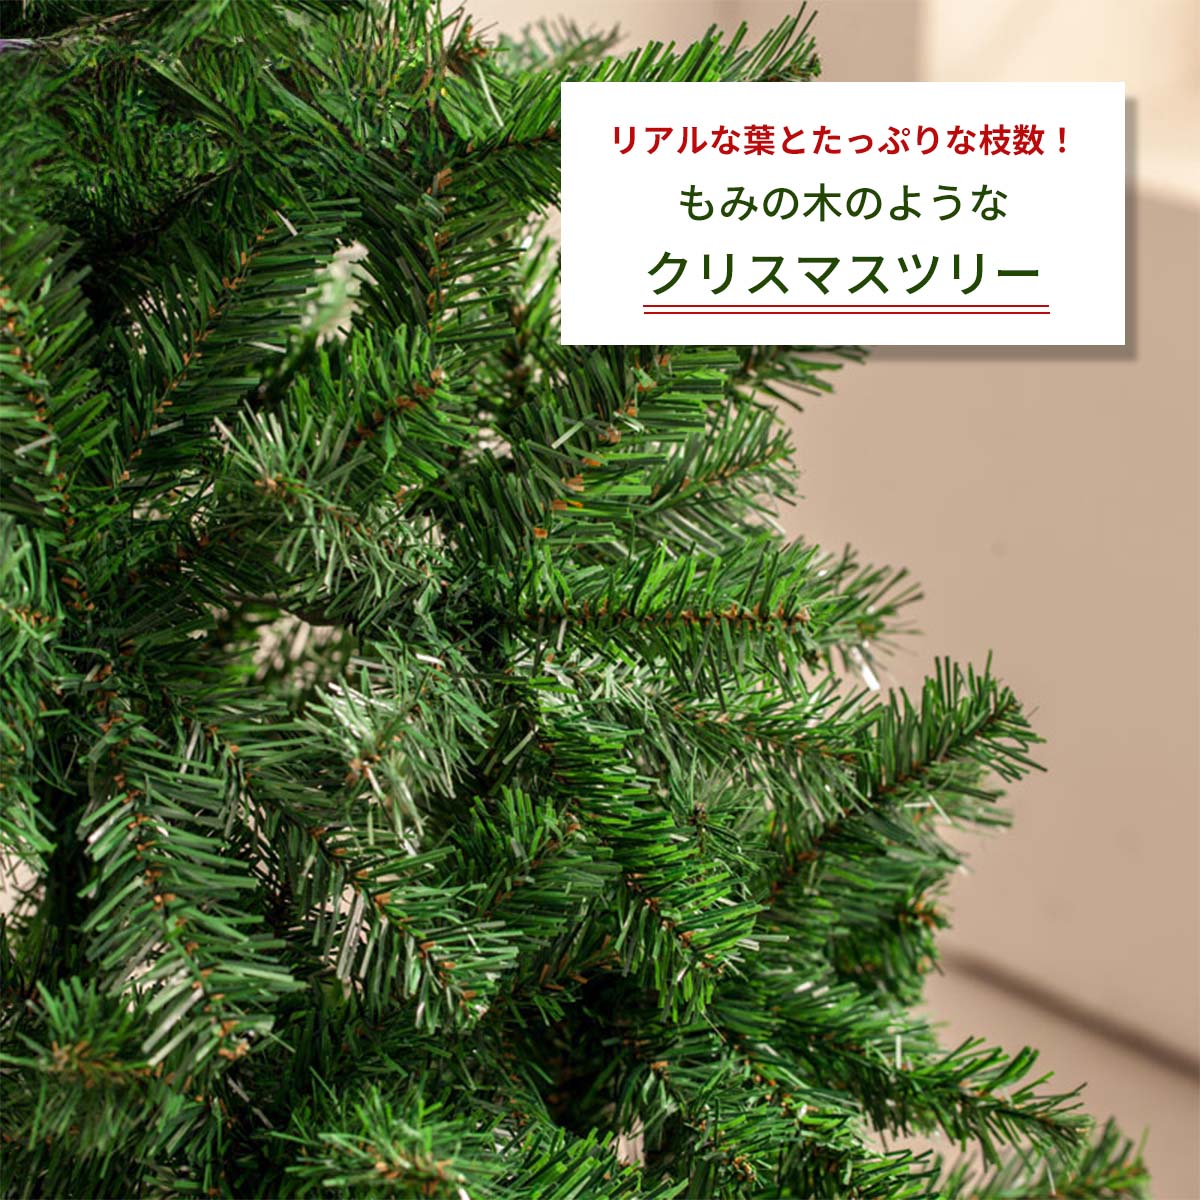 [180cm] VeroMan クリスマスツリー グリーン もみの木 ヌードツリー 北欧 おしゃれ クリスマスデコレーション ツリー 単品 飾りなし 3